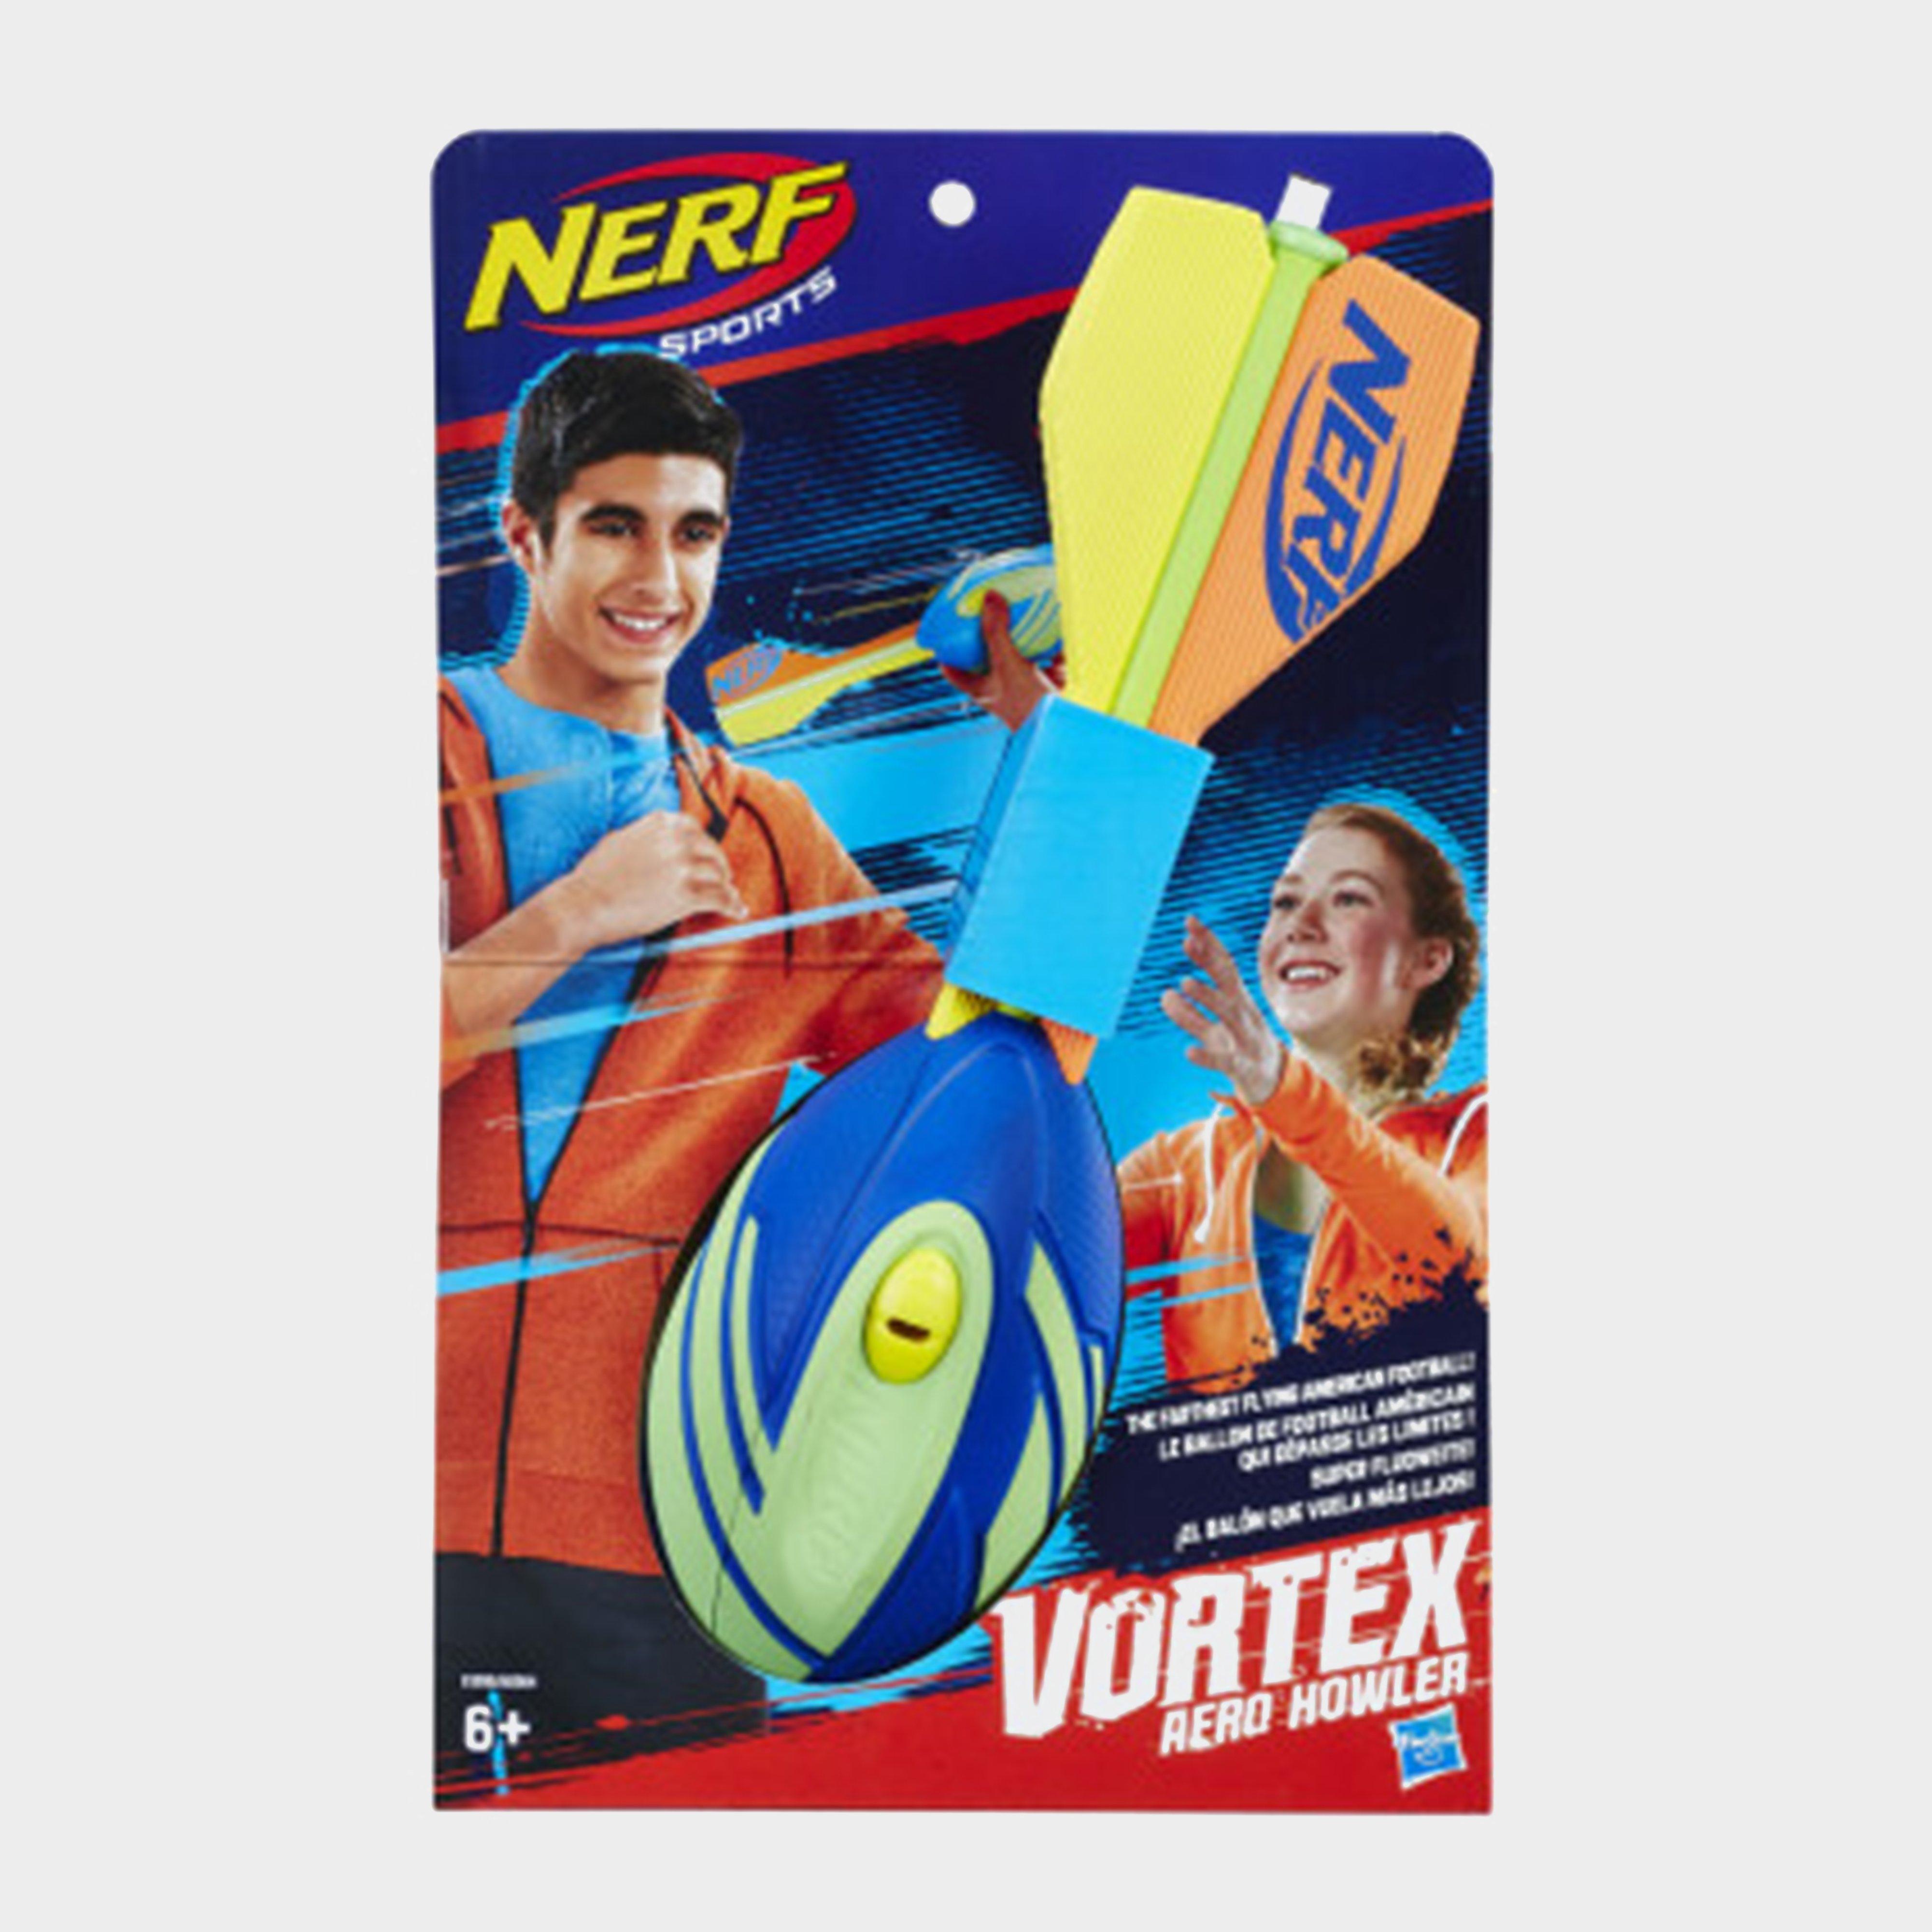 Nerf Vortex Aero Howler Review